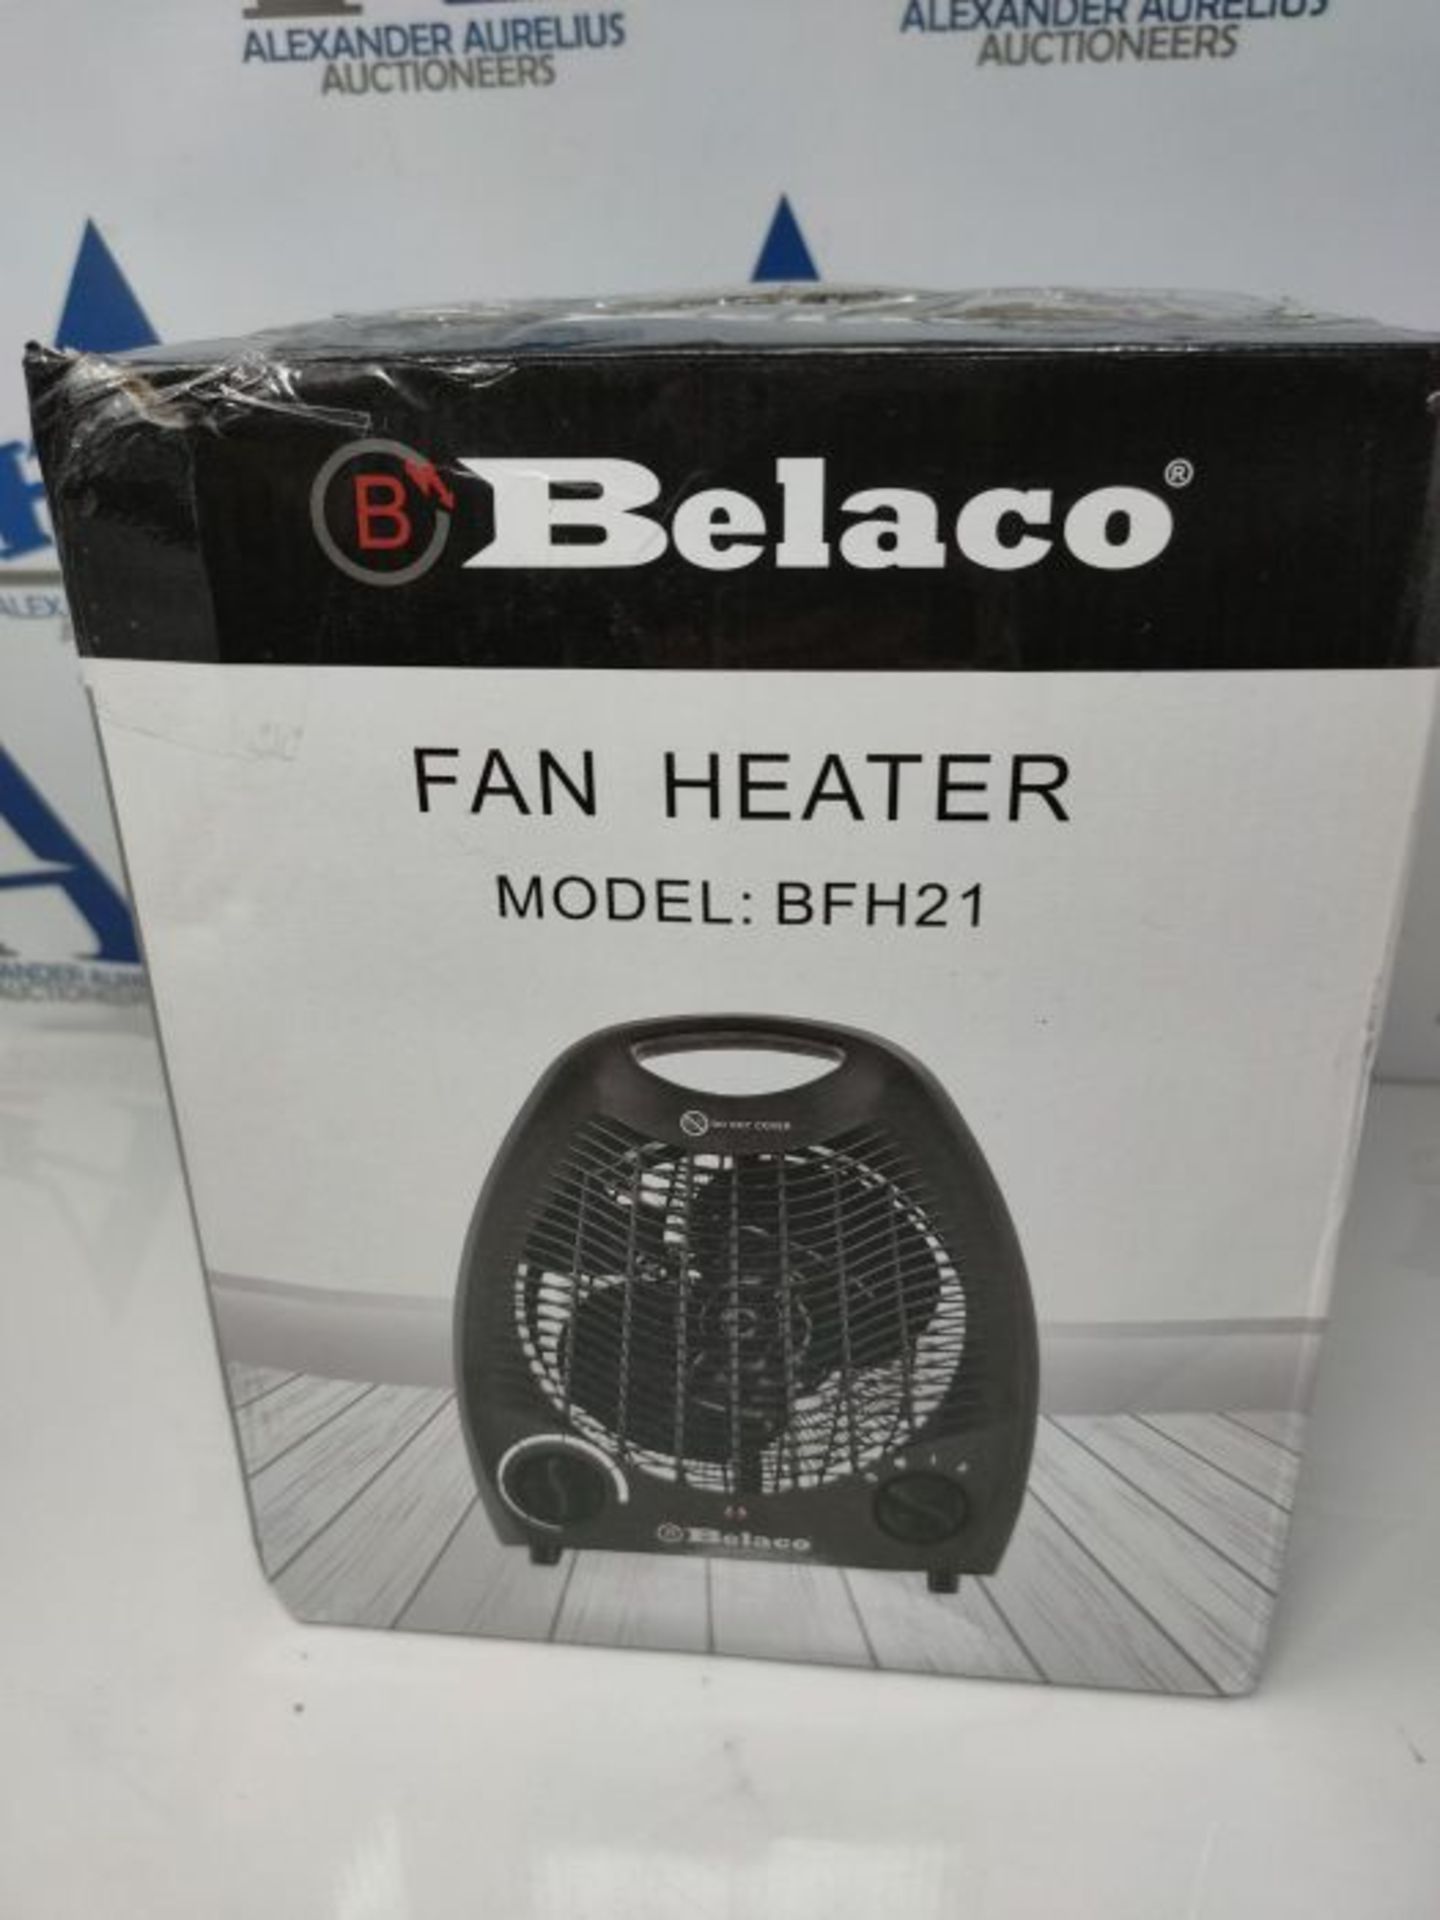 Belaco Fan Heater 2 Heat Settings 1000/2000W Electric Heaters Overheat Protection BFH2 - Image 5 of 6